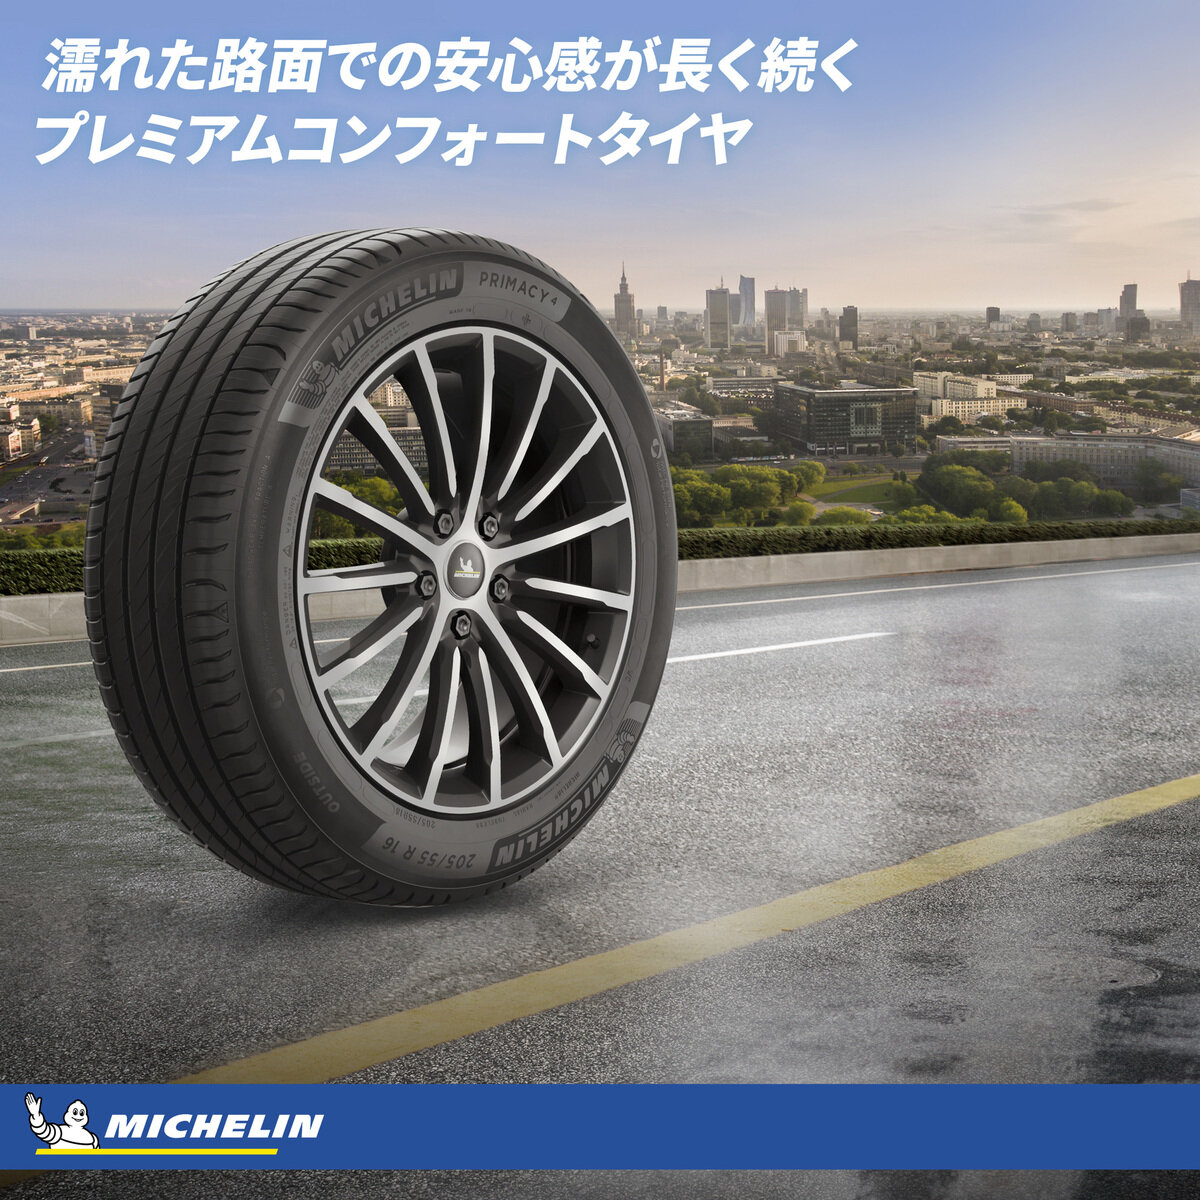 Michelin 205/55 R17 95V XL TL PRIMACY 4+ MI | Costco Japan